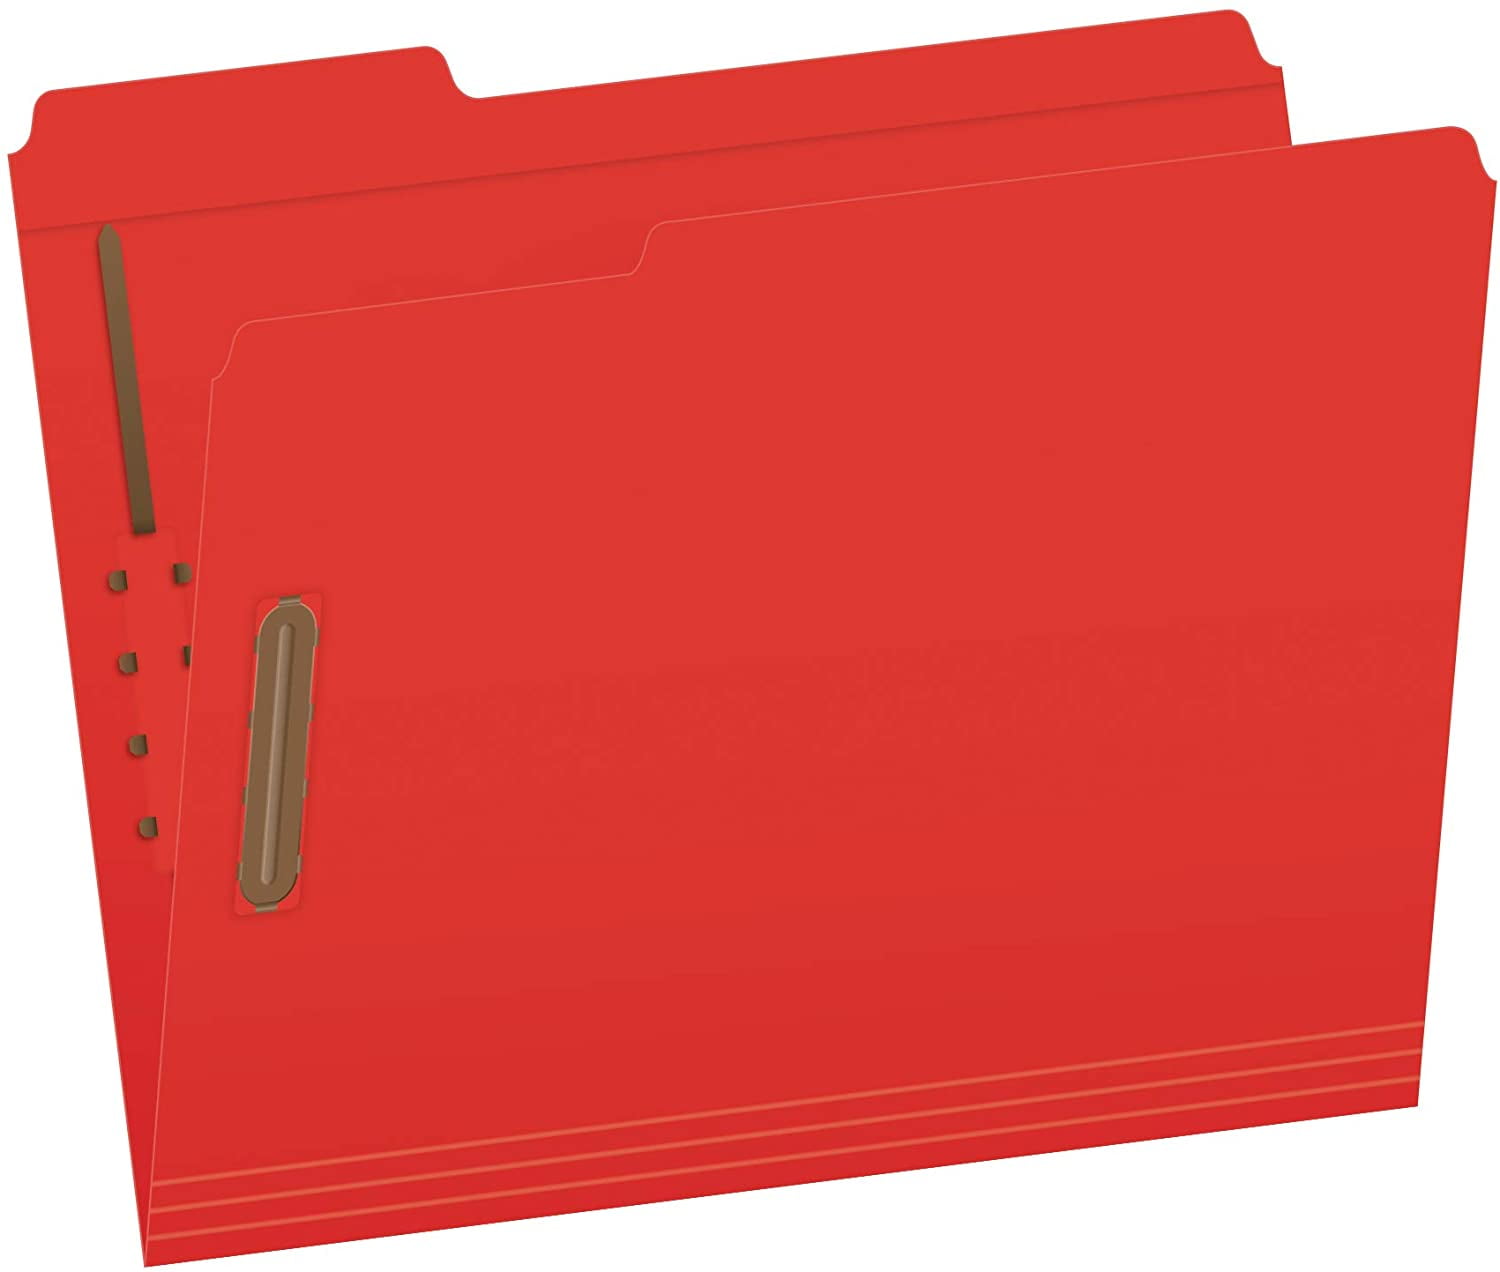 10 PCS A4 Kraft Envelop File Bags with String Button Closure Paper Document Portfolio Bills Receipt Storage Organizer Bag File Folders Project Pockets Filing Envelop Business Office Supplies